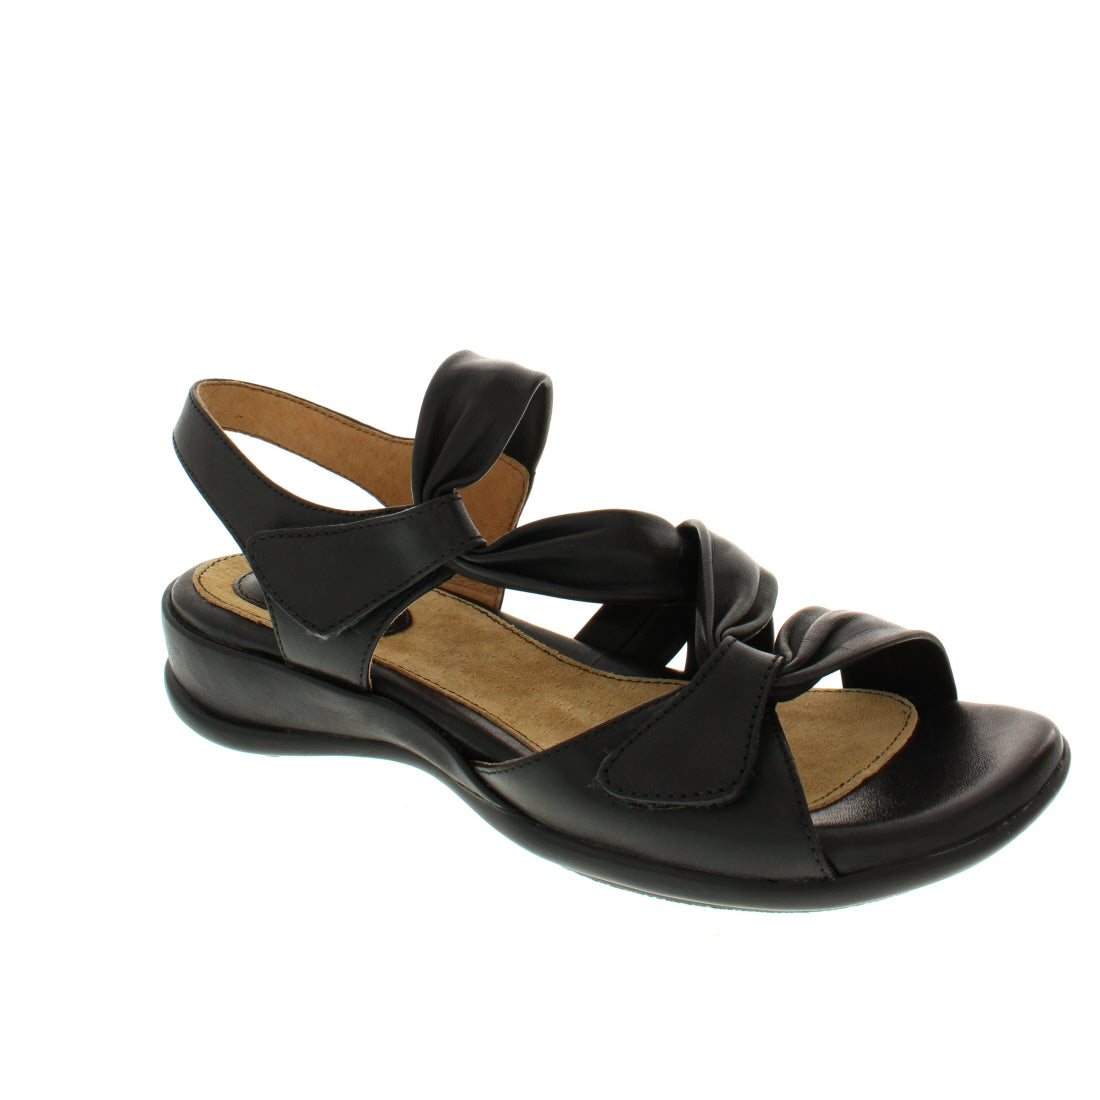 clarks lucena sandals black